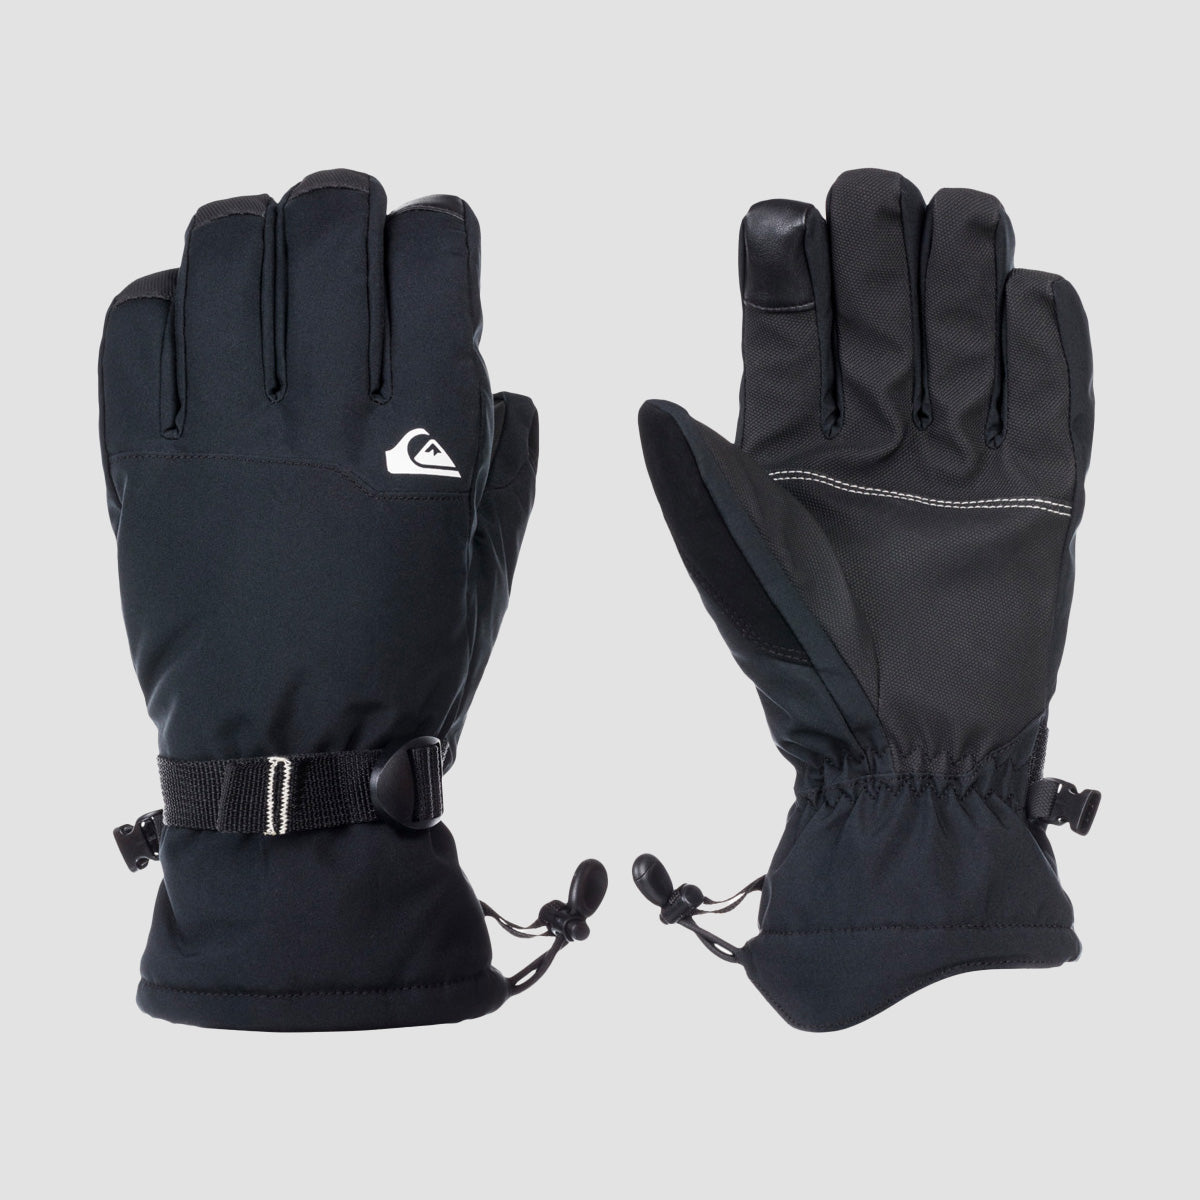 Snow Mission Gloves Quiksilver Black True